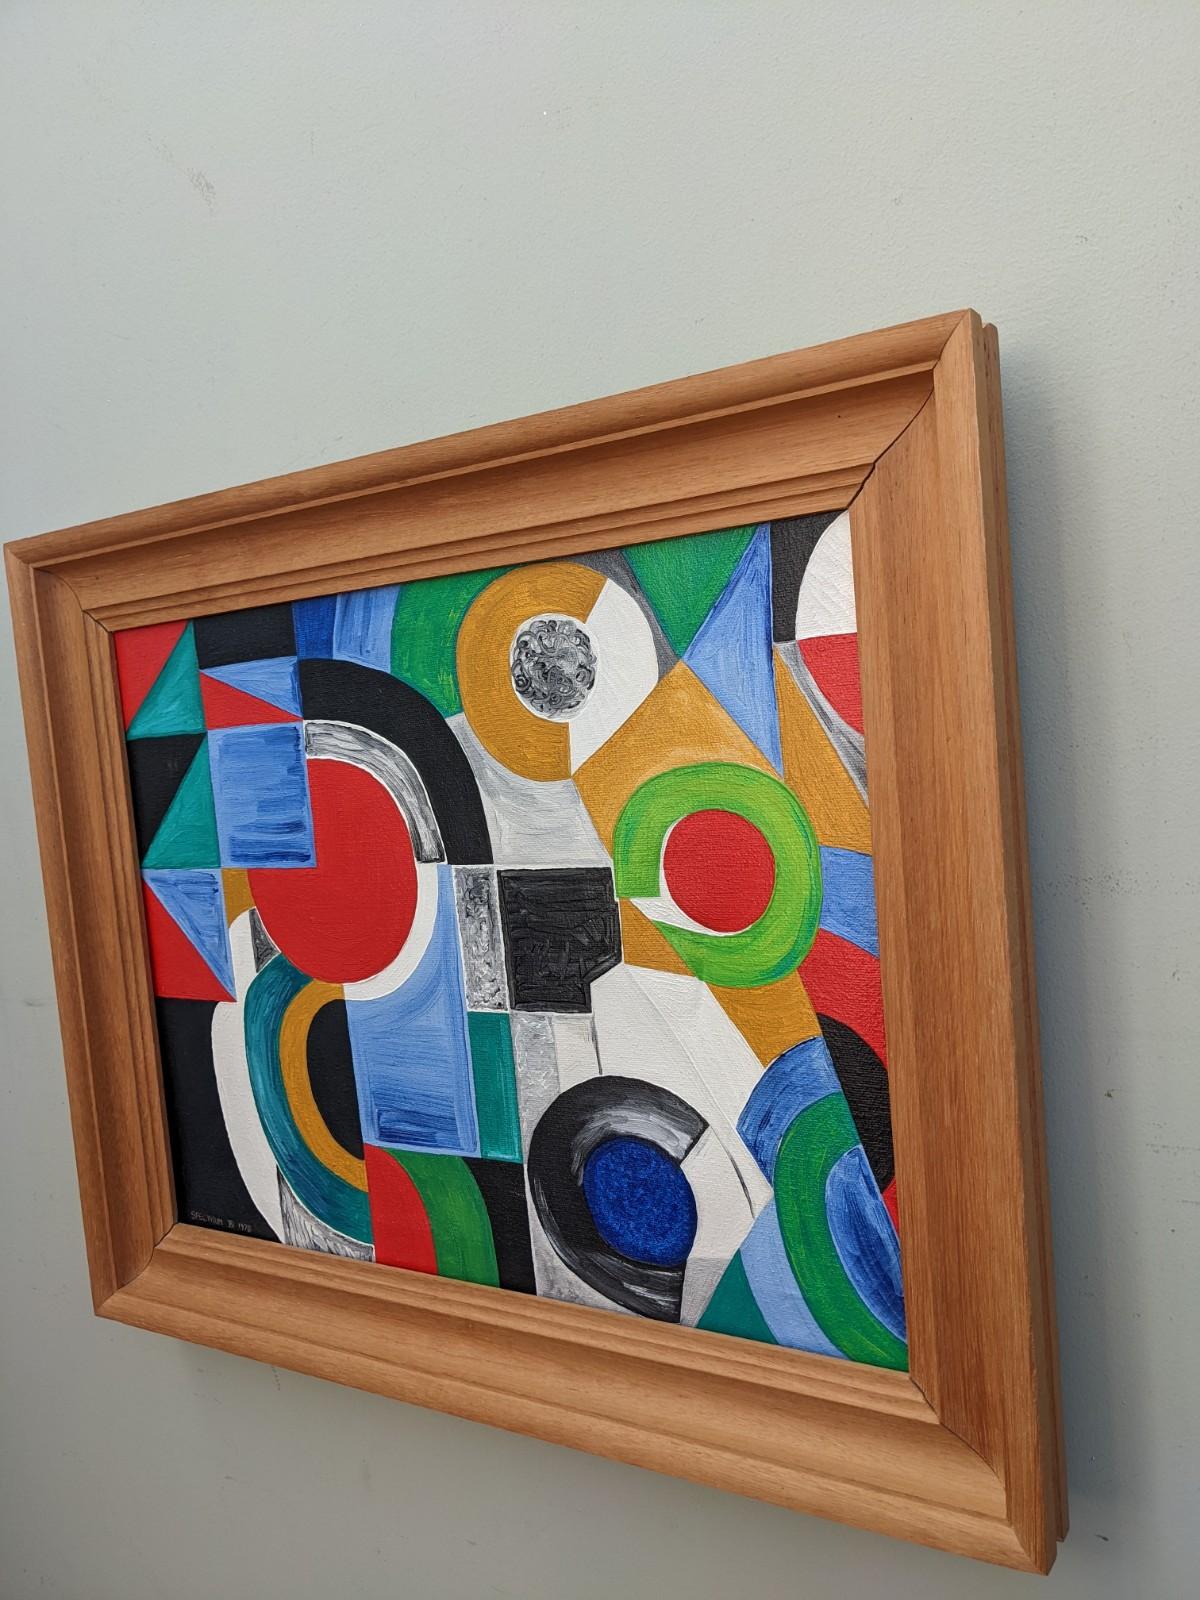 1978 Vintage Modernist Abstract Geometric Framed Oil Painting - Spectrum 2